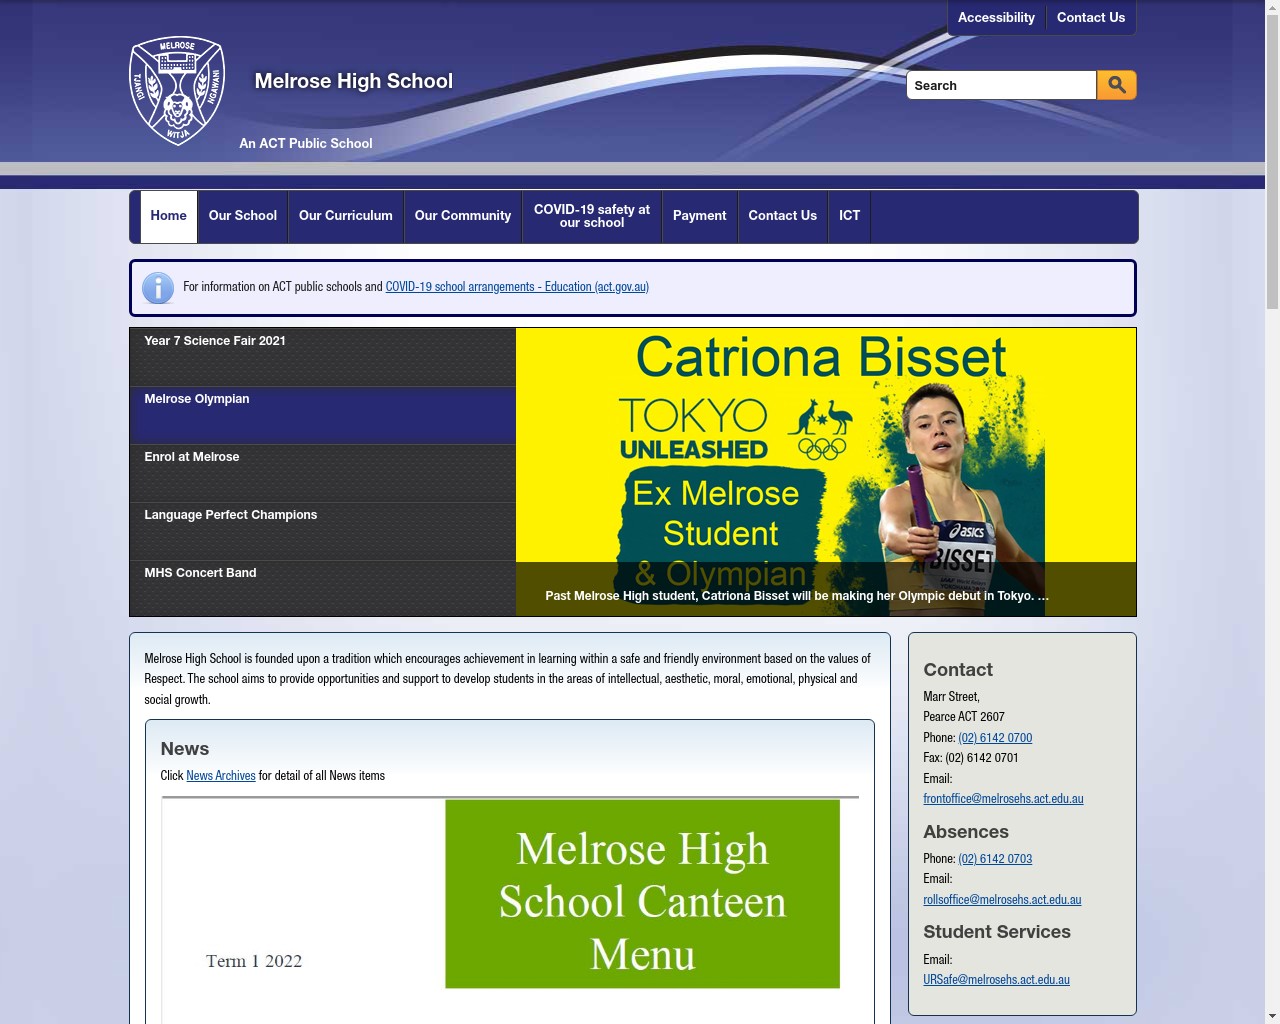 Melrose High School